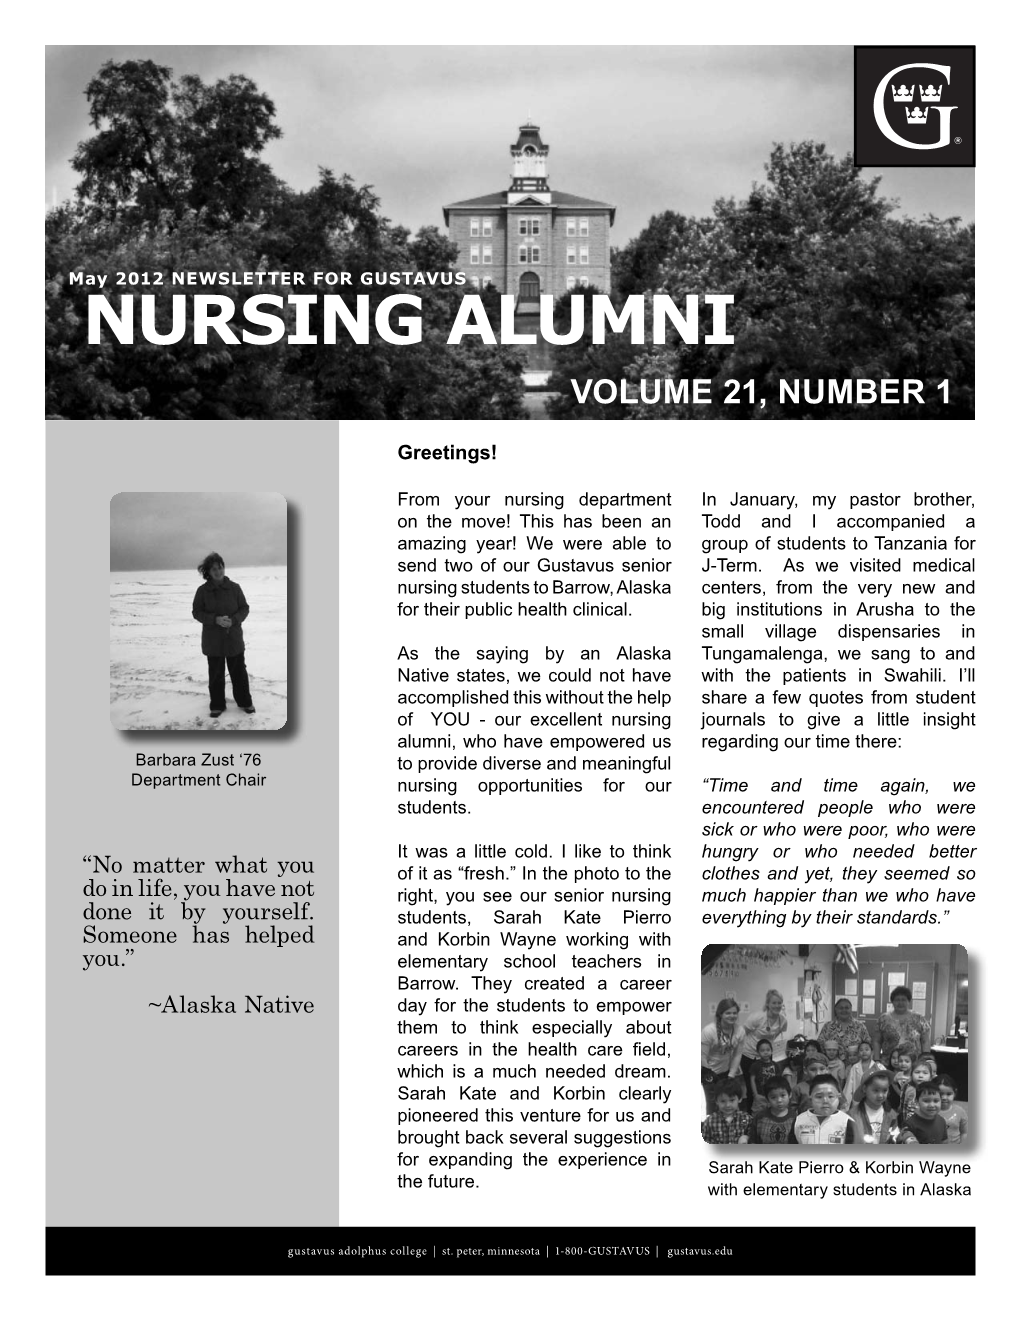 Nursing Alumni Volume 21, Number 1